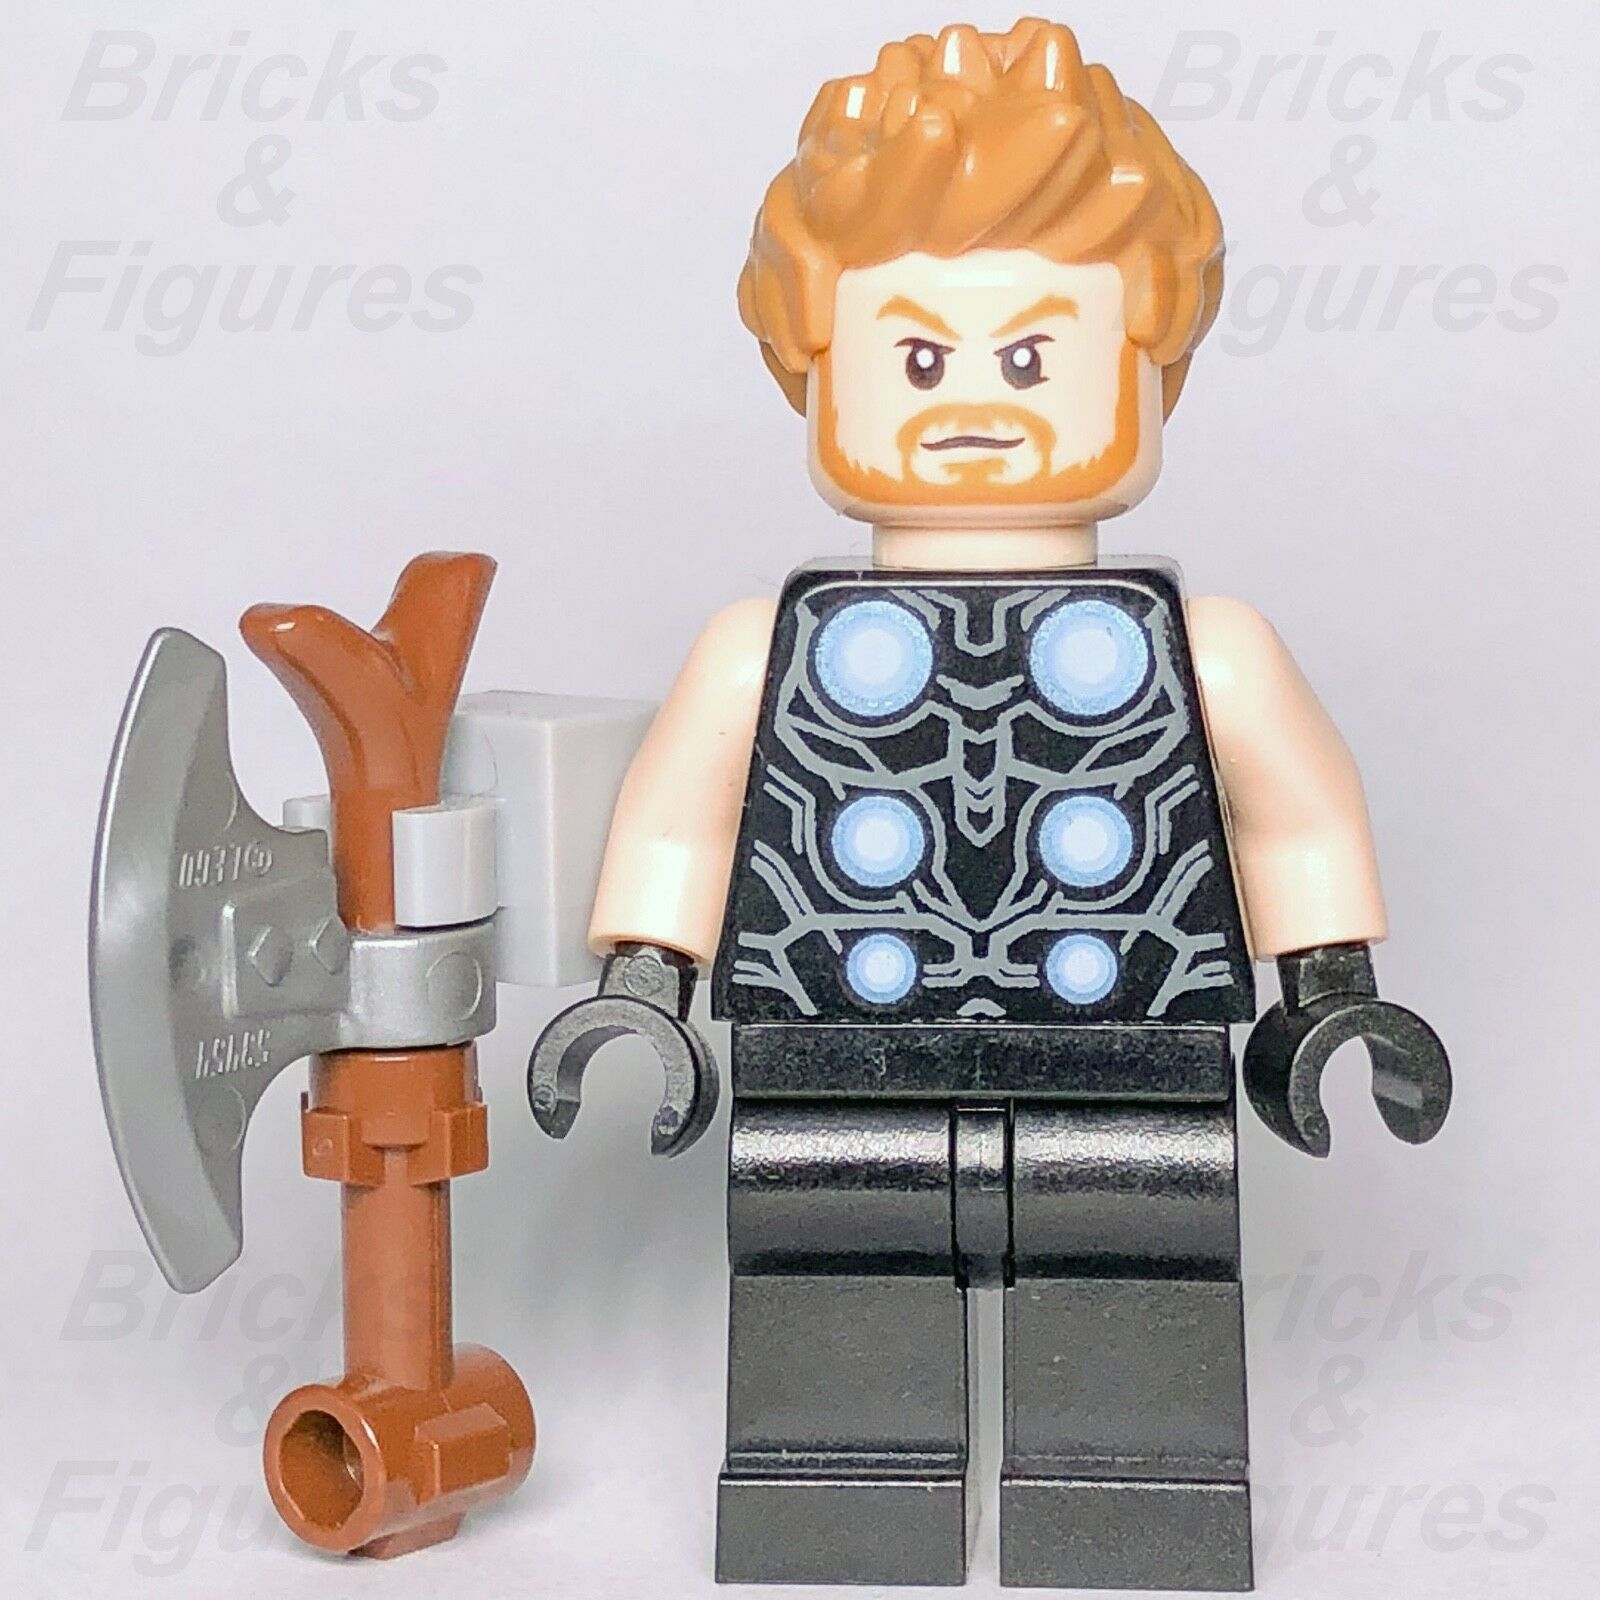 New Marvel Super Heroes LEGO Thor Avengers Infinity War Minifigure 76102 - Bricks & Figures